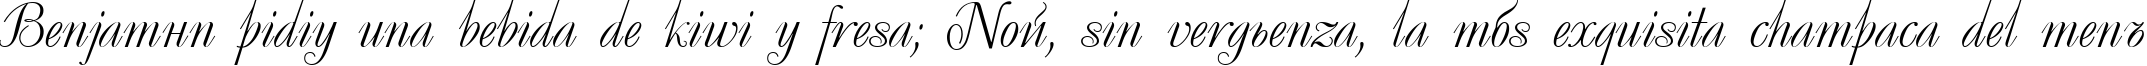 Пример написания шрифтом Decor Cyrillic текста на испанском